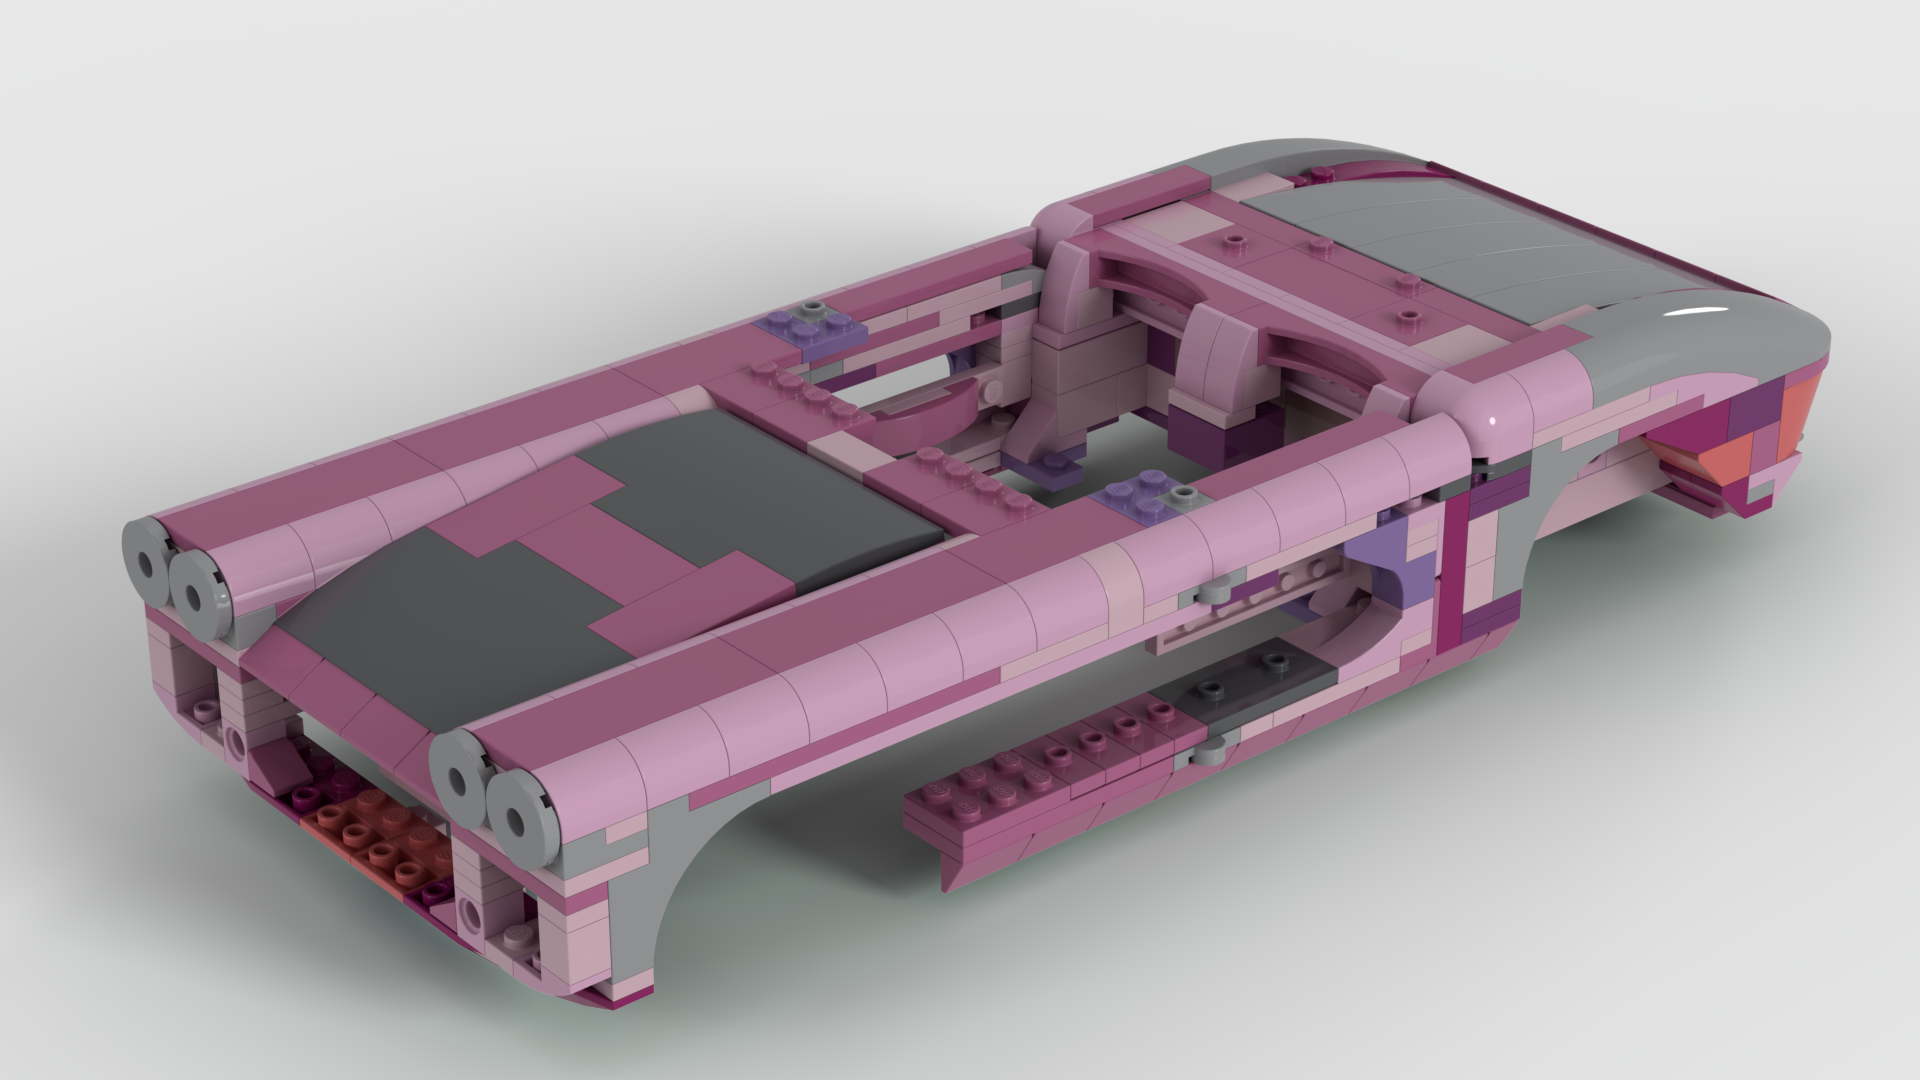 Can The LEGO Corvette Be Built As A Pink Barbie Dream Car?